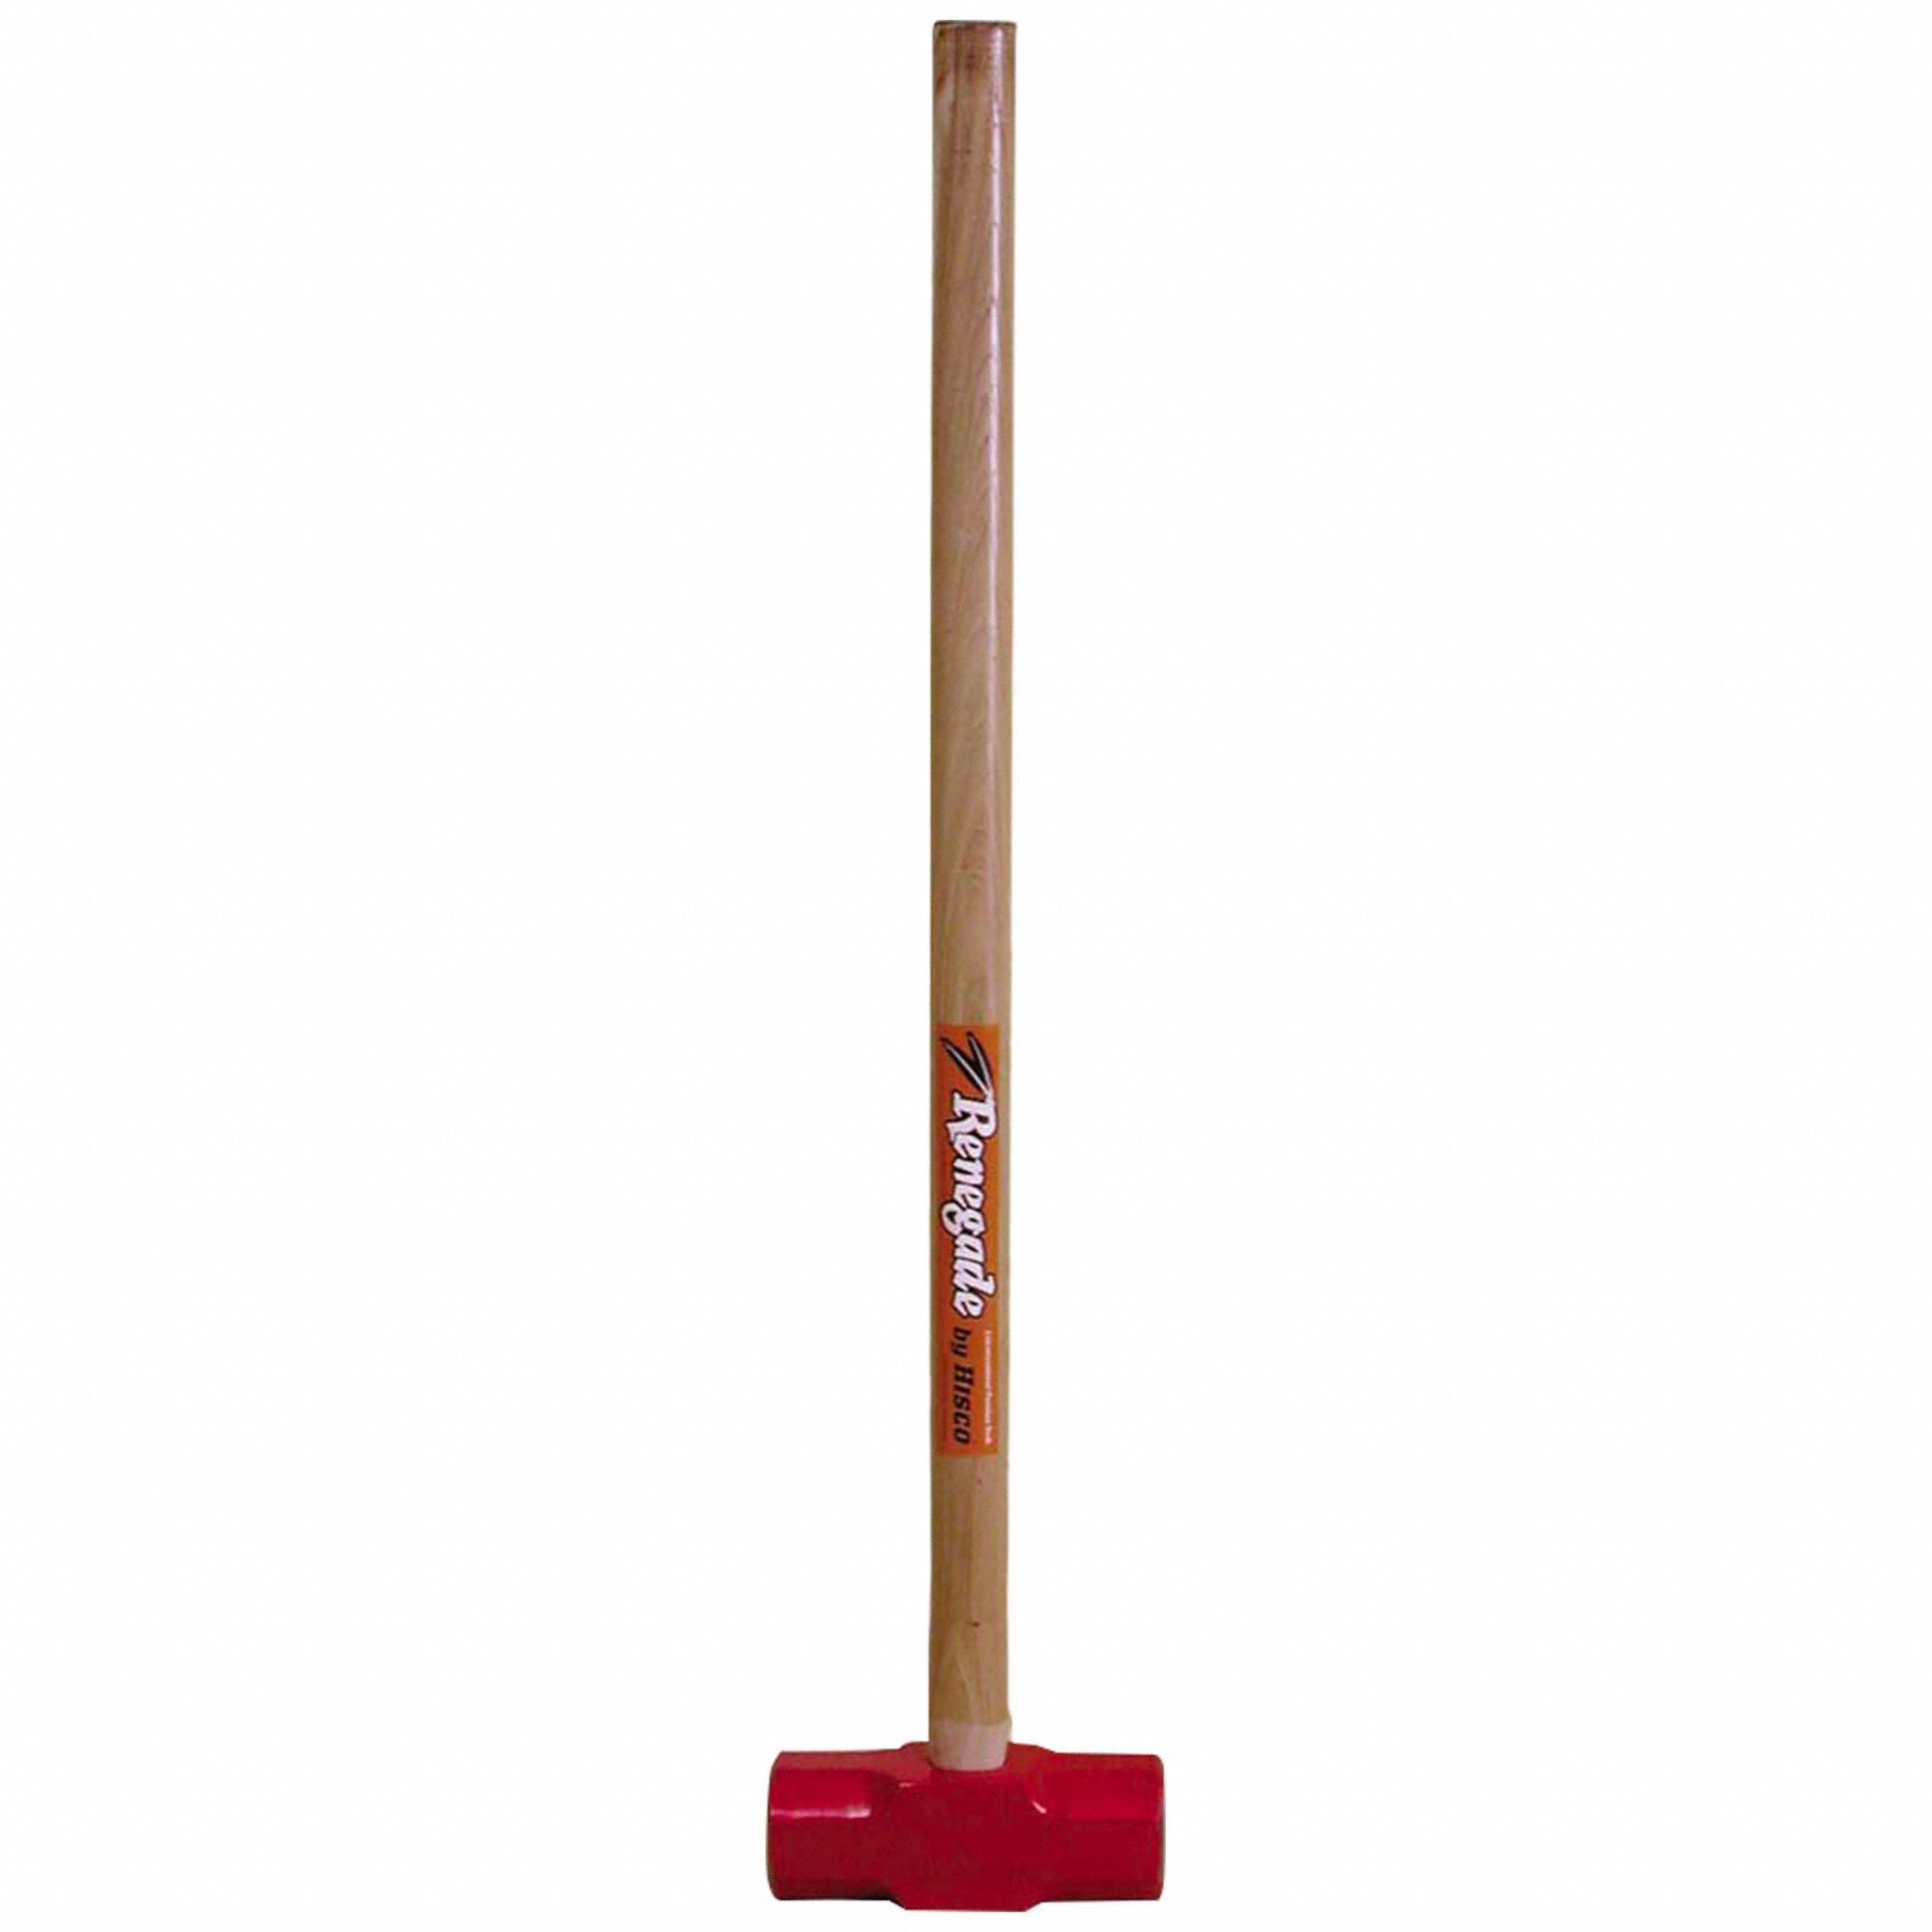 Sledge Hammer: Steel, Wood Handle, 12 lb Head Wt, 3 in Dia, 35 in Overall Lg, Plain Grip